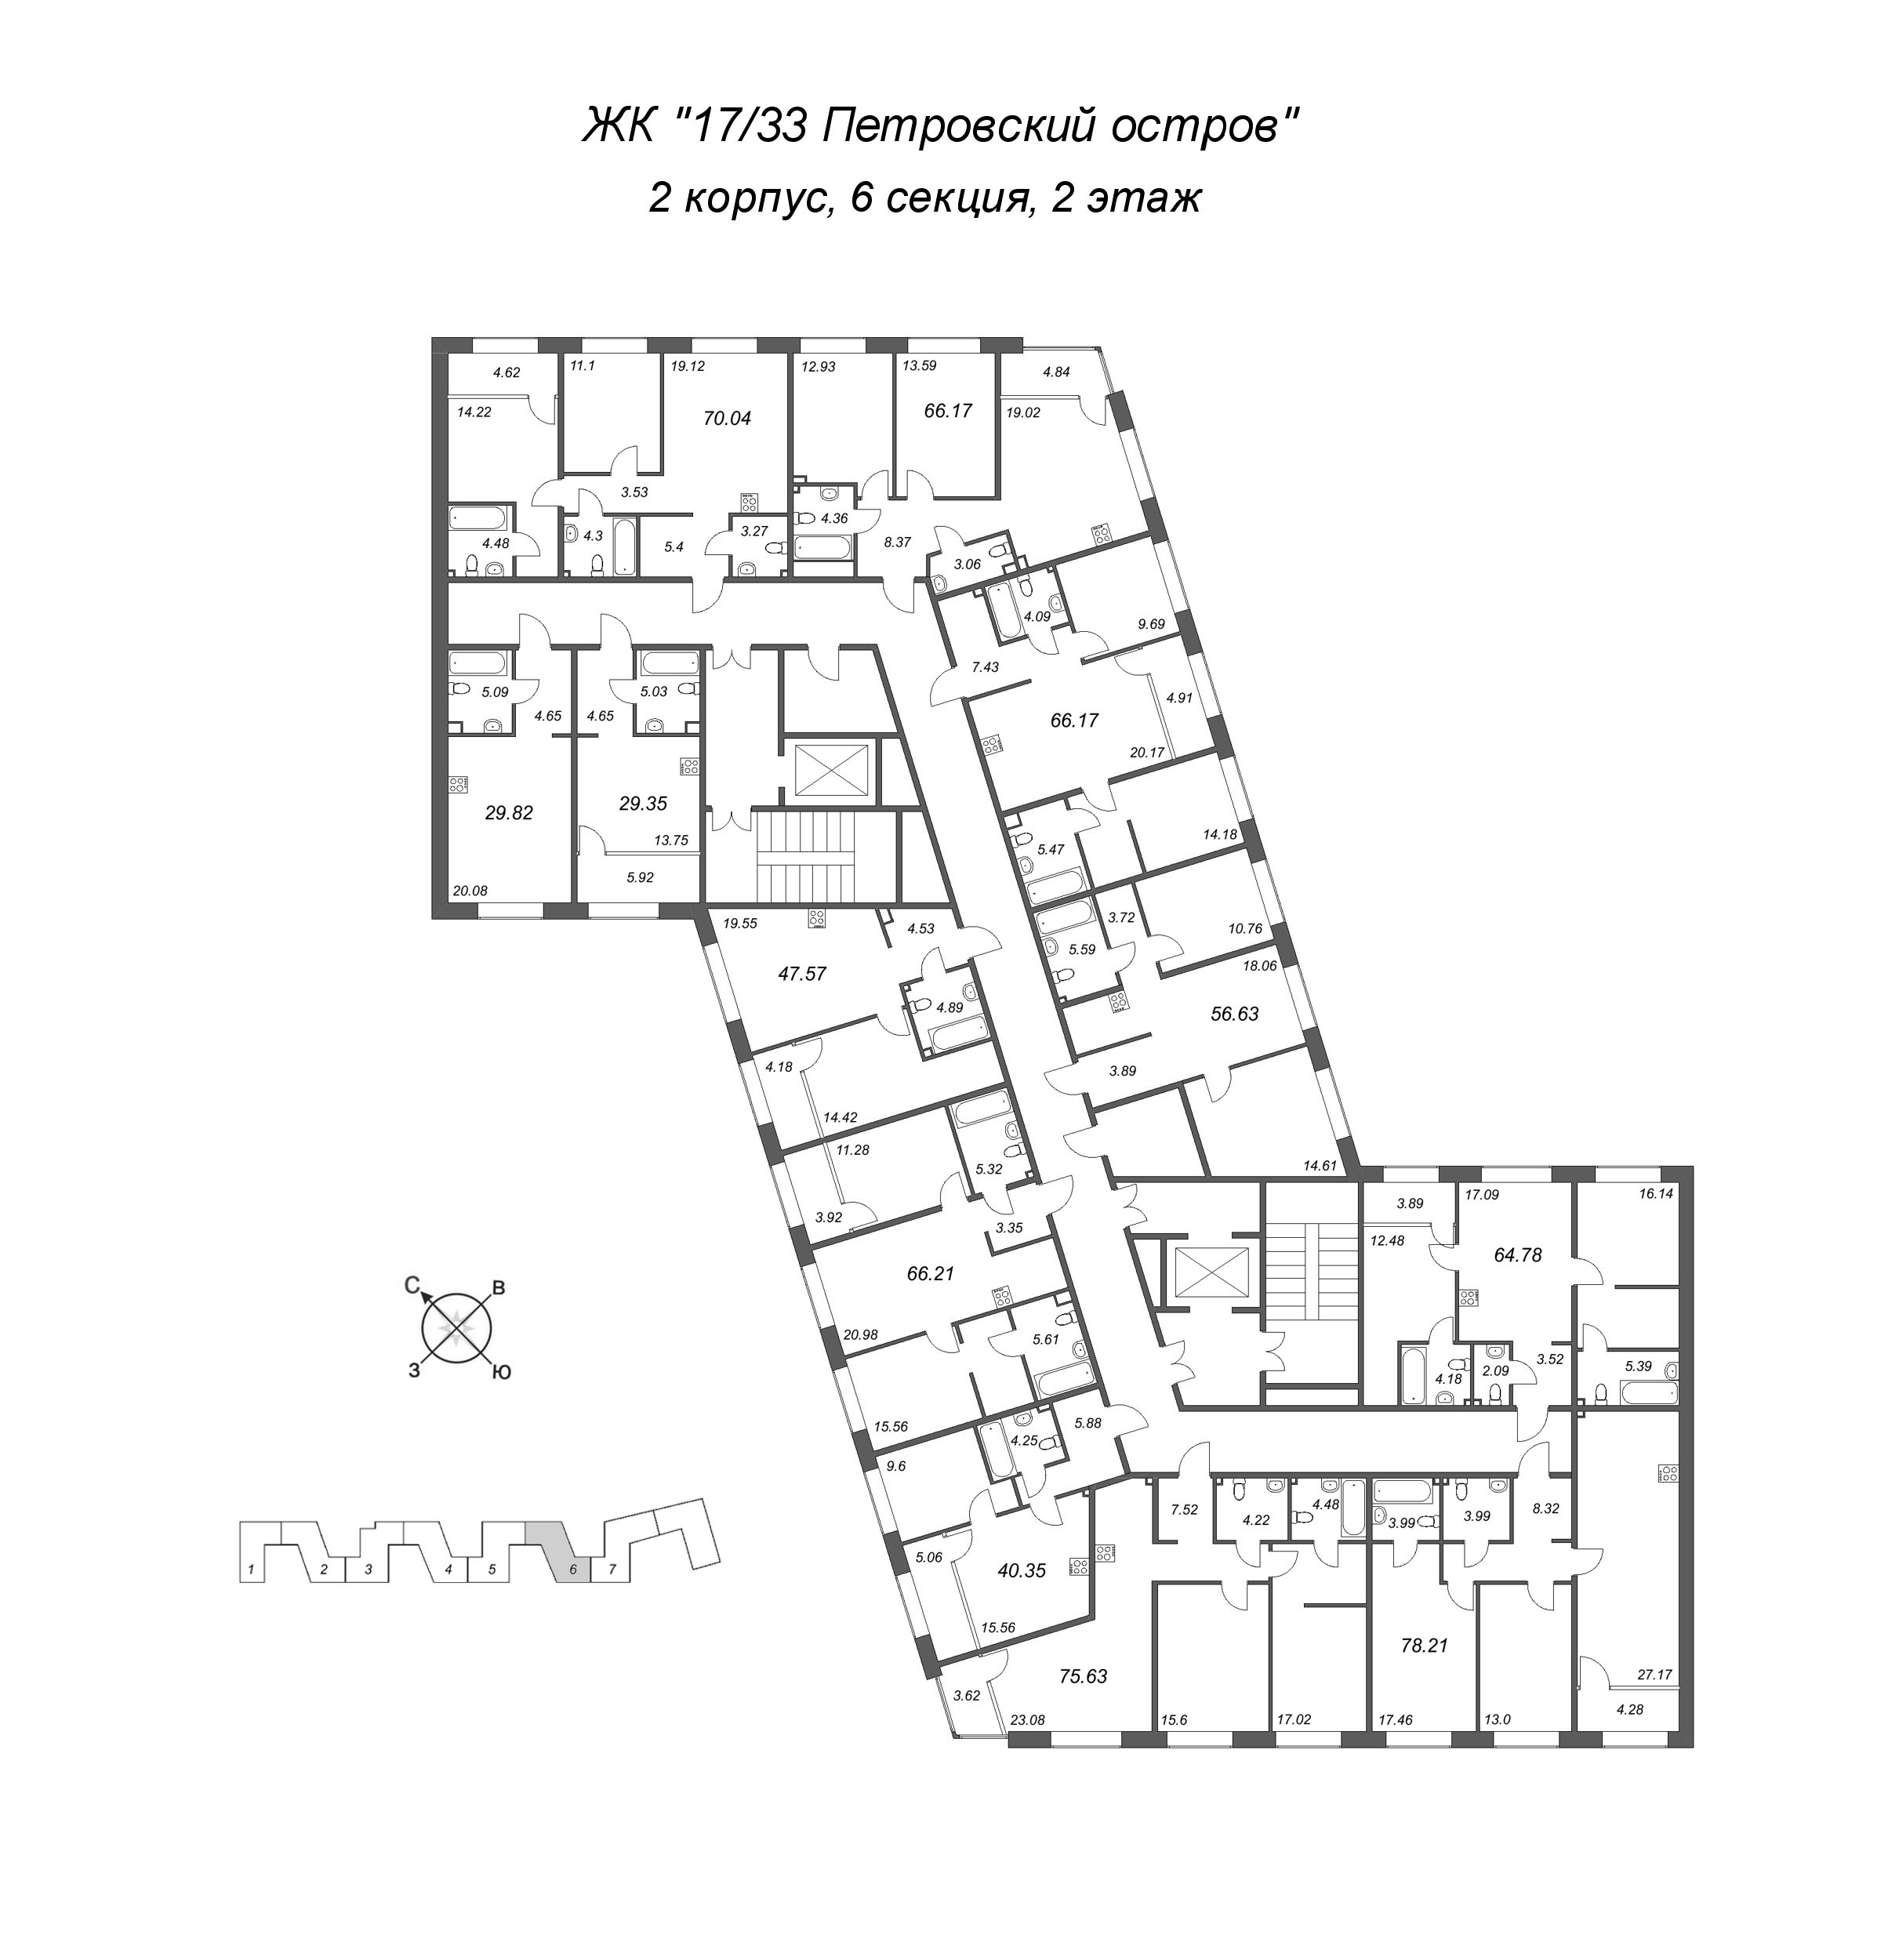 3-комнатная (Евро) квартира, 66.17 м² - планировка этажа